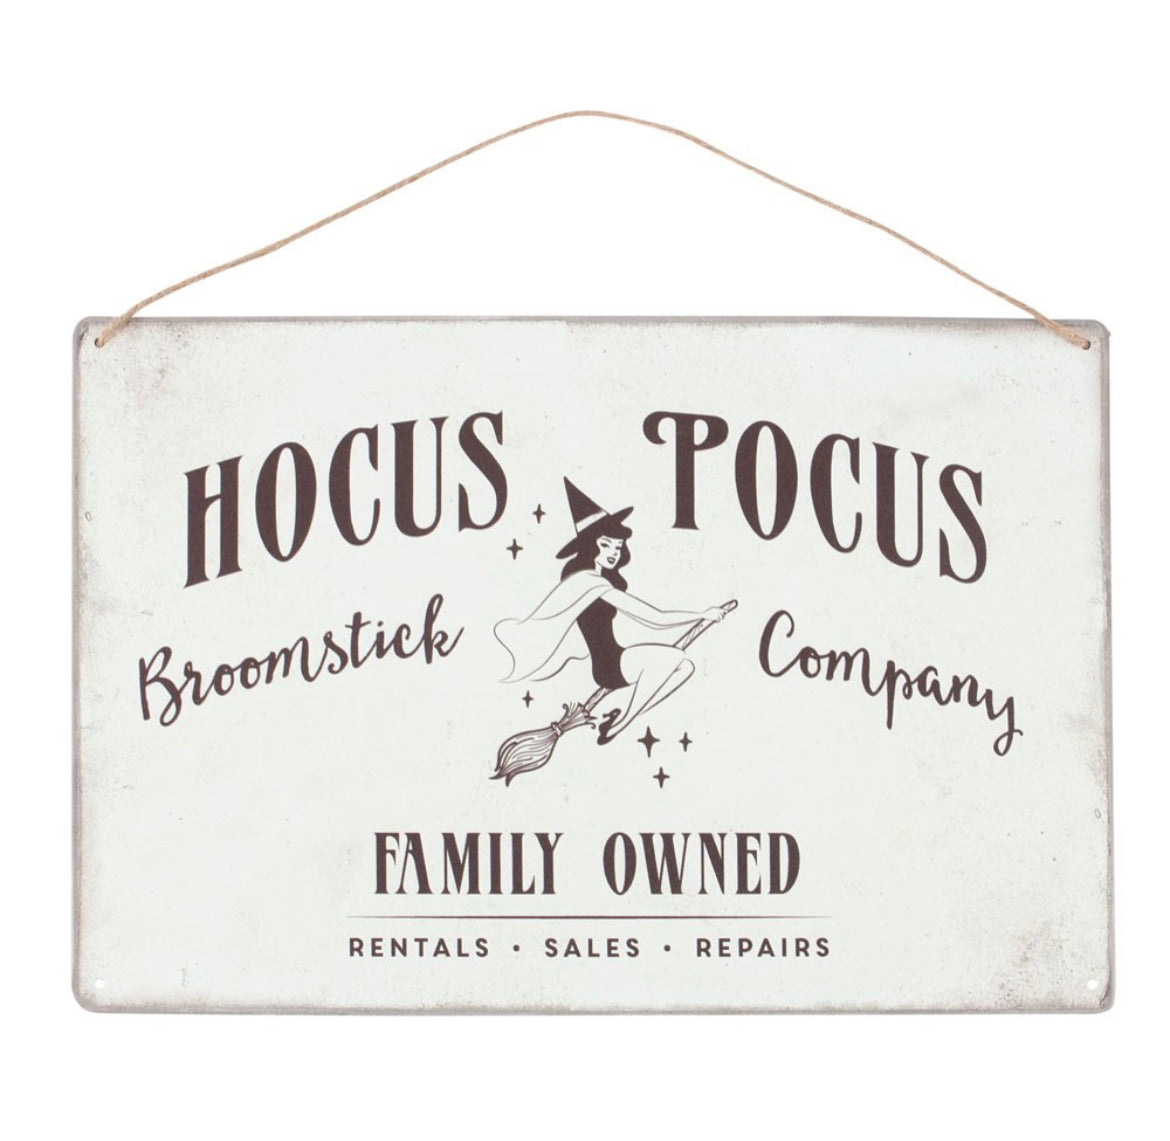 Hocus Pocus Broomstick Company Metal Hanging Sign - Wicked Witcheries